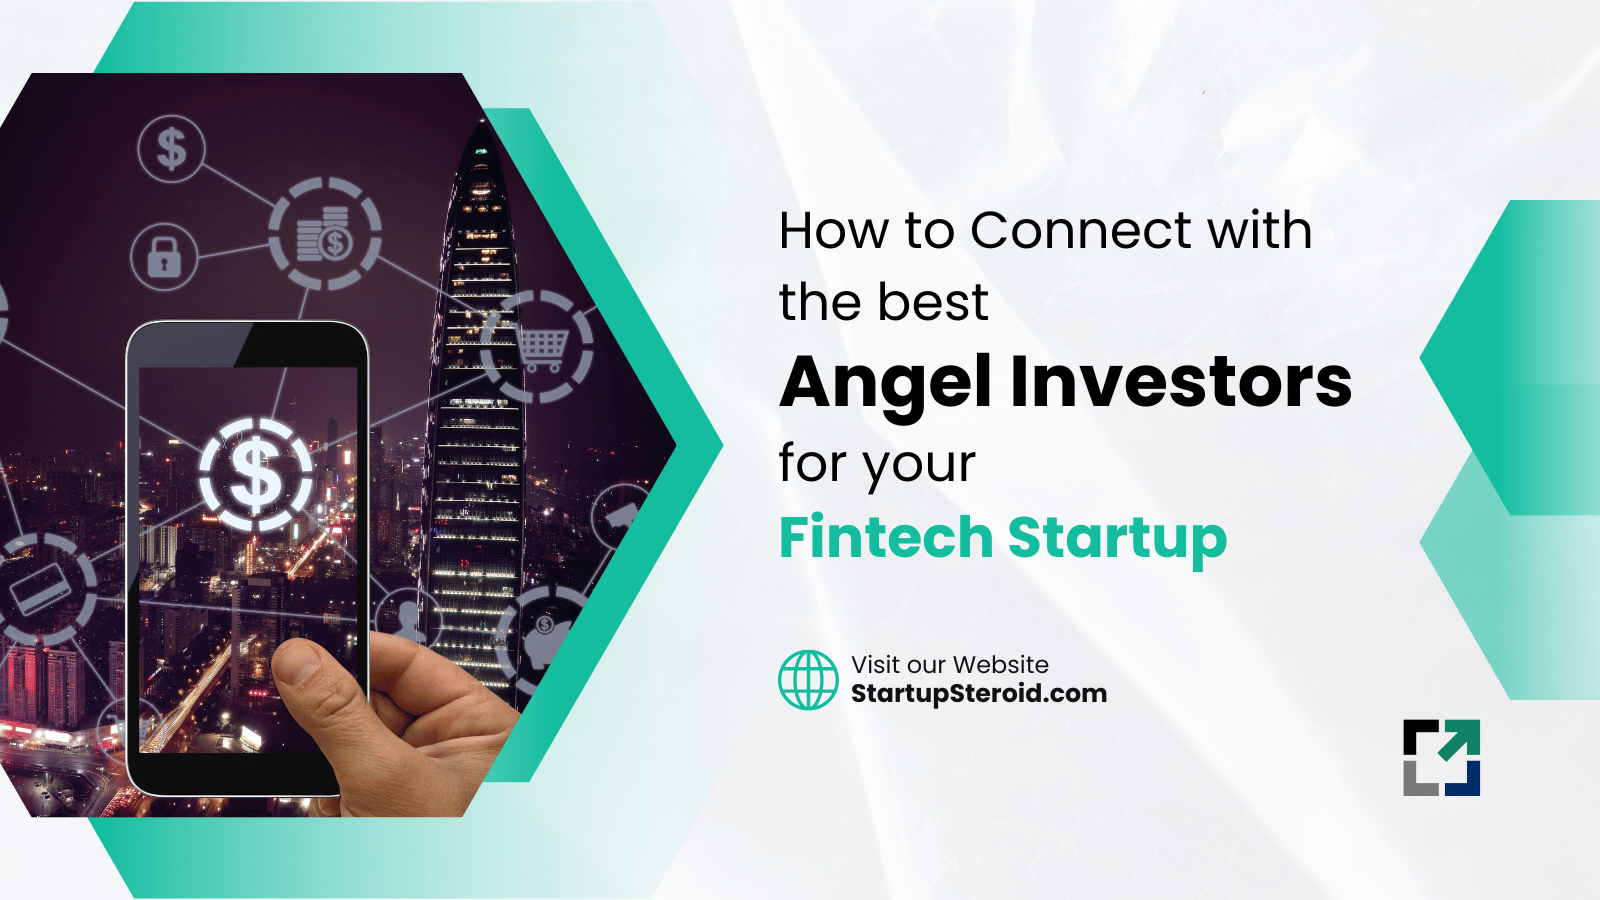 Find Angel Investors for Your Fintech Startup